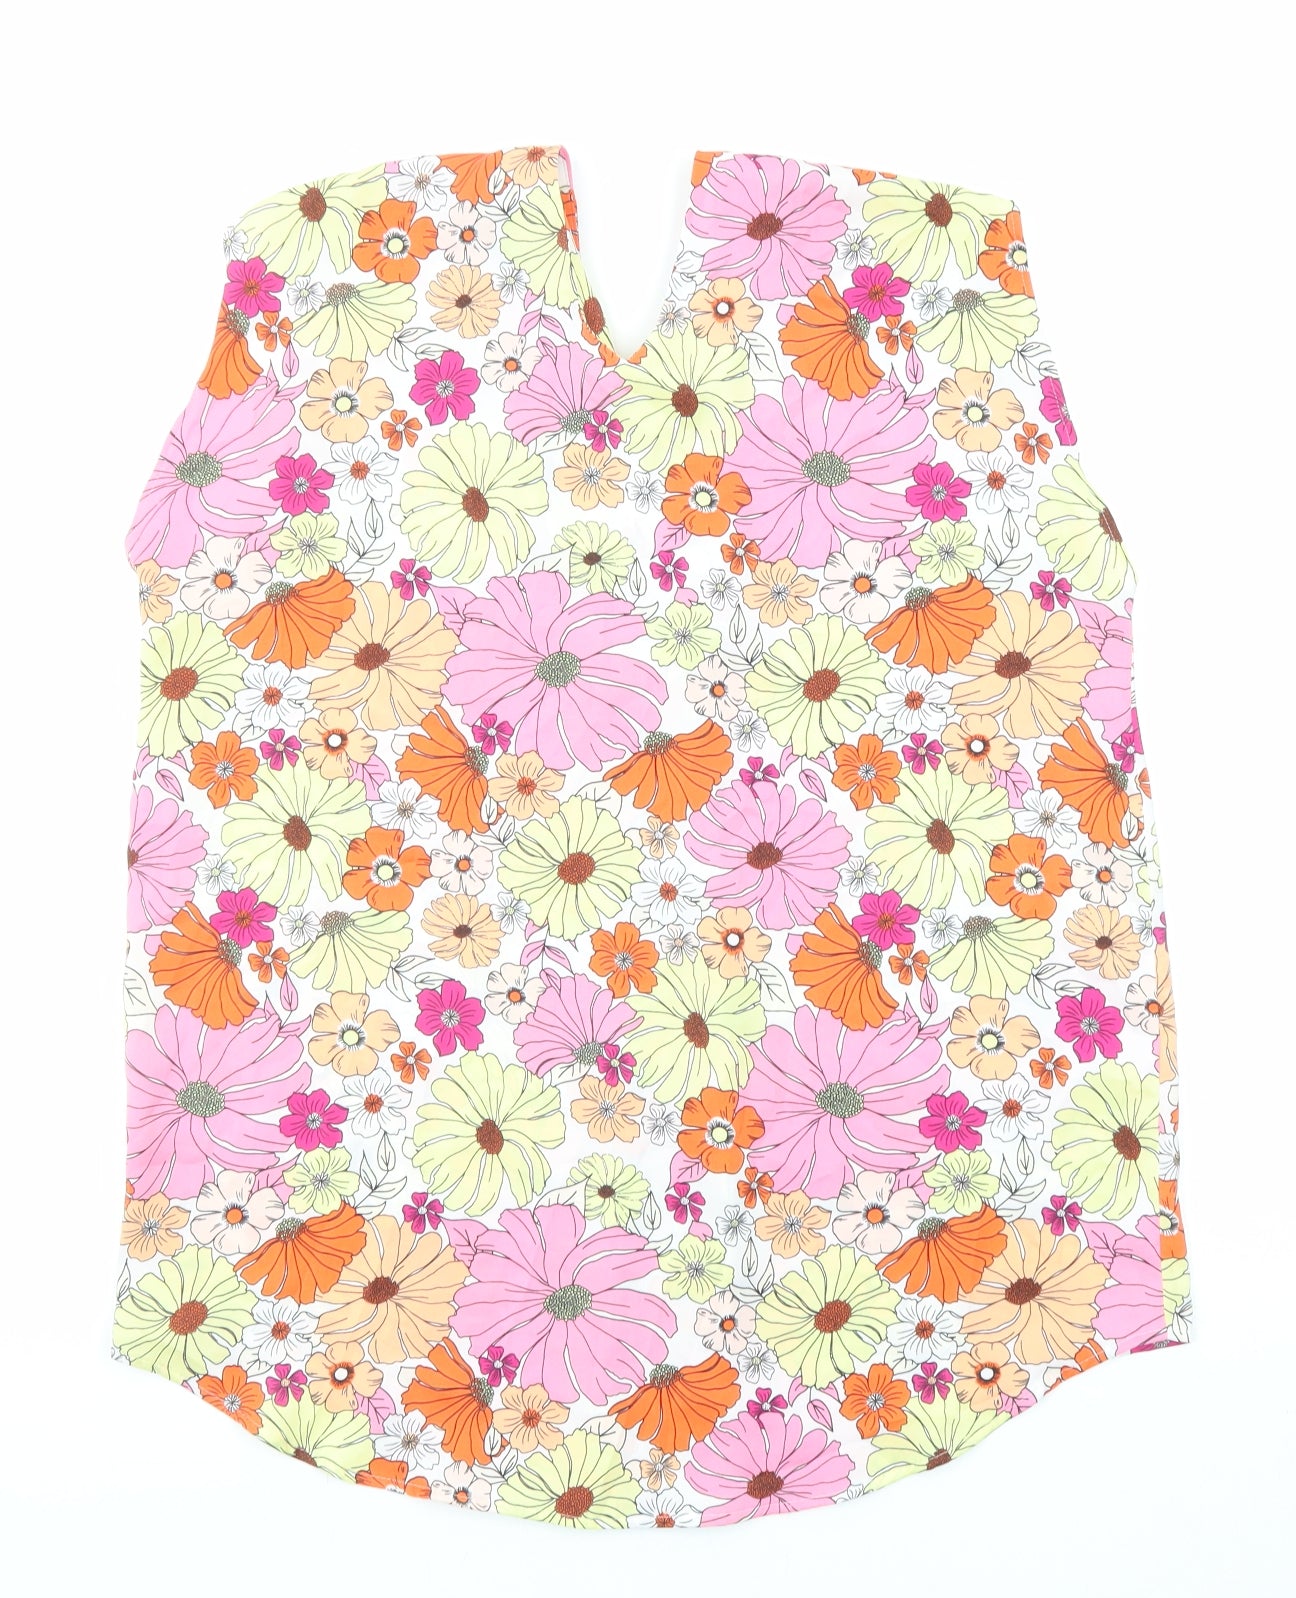 Marks and Spencer Womens Multicoloured Floral Polyester Basic Blouse Size 12 V-Neck